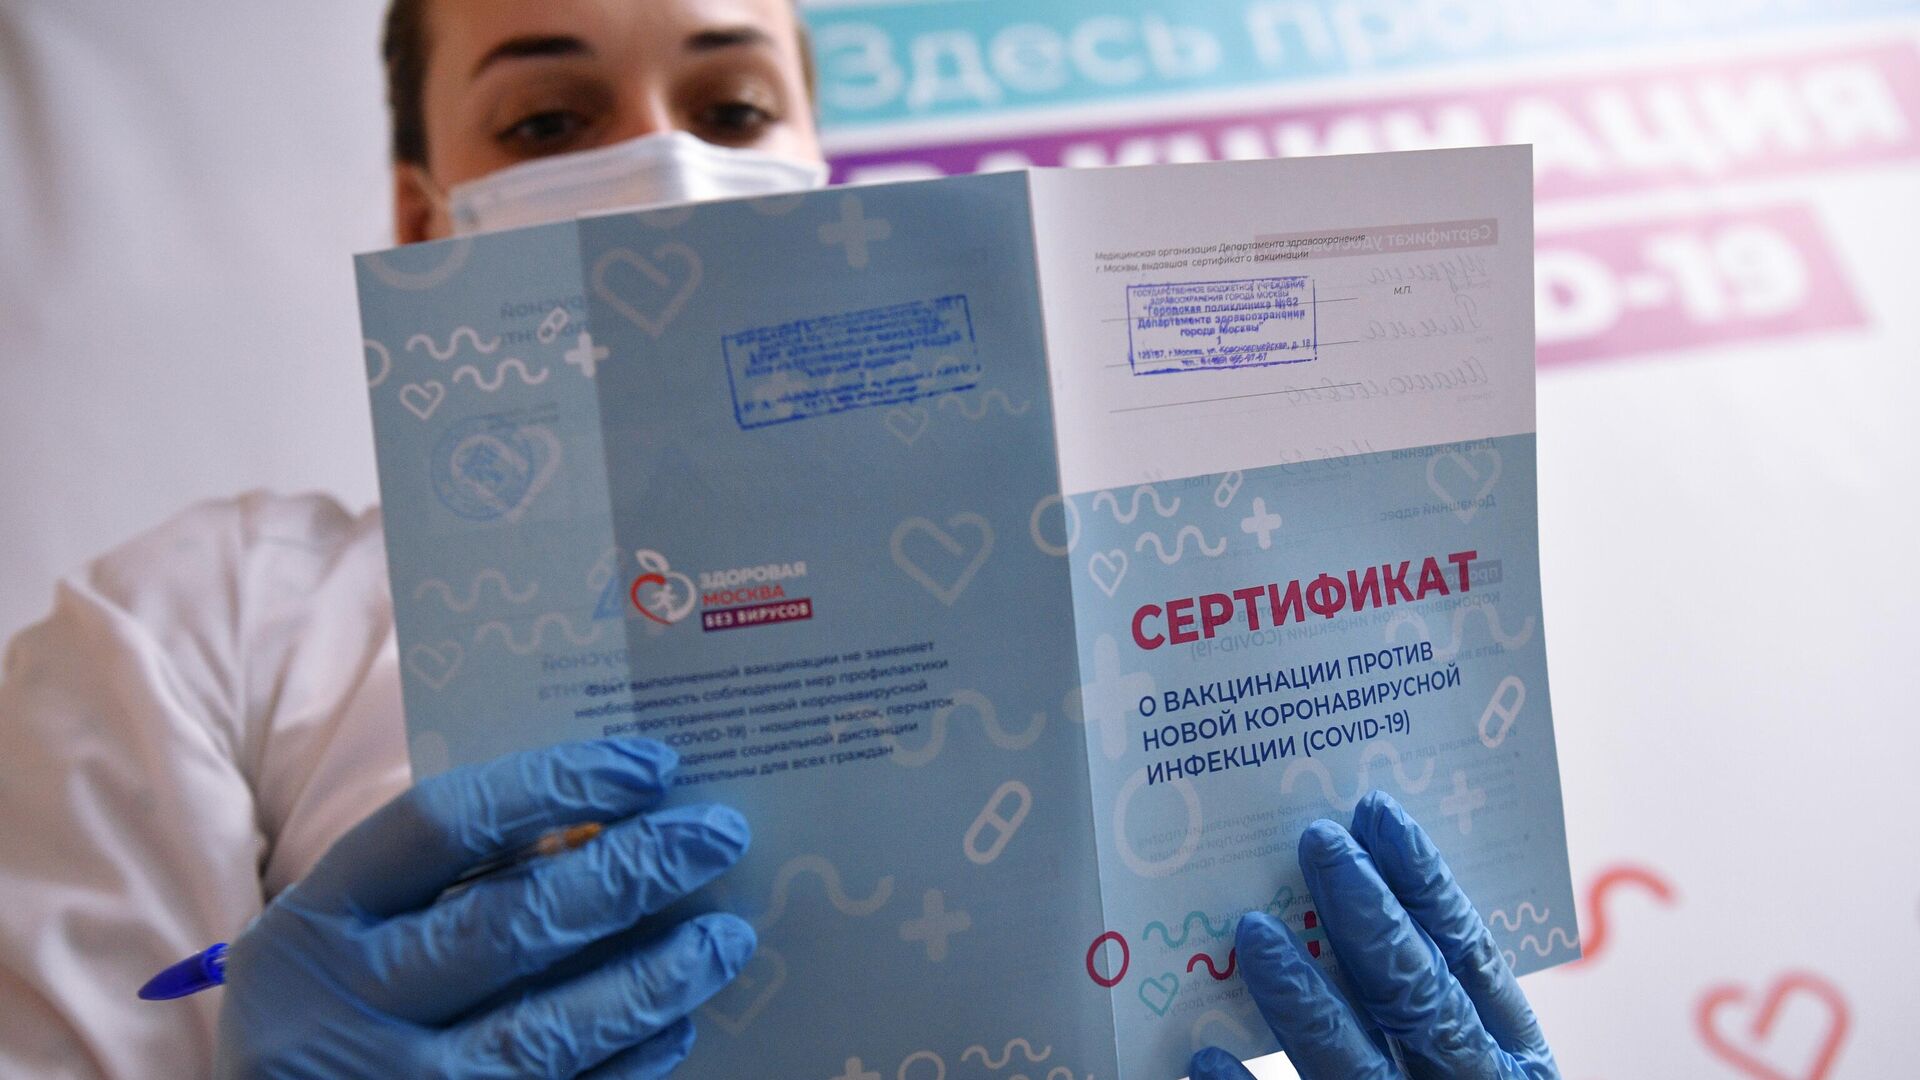 Сертификат о вакцинации против коронавирусной инфекции (COVID-19) - РИА Новости, 1920, 19.07.2021